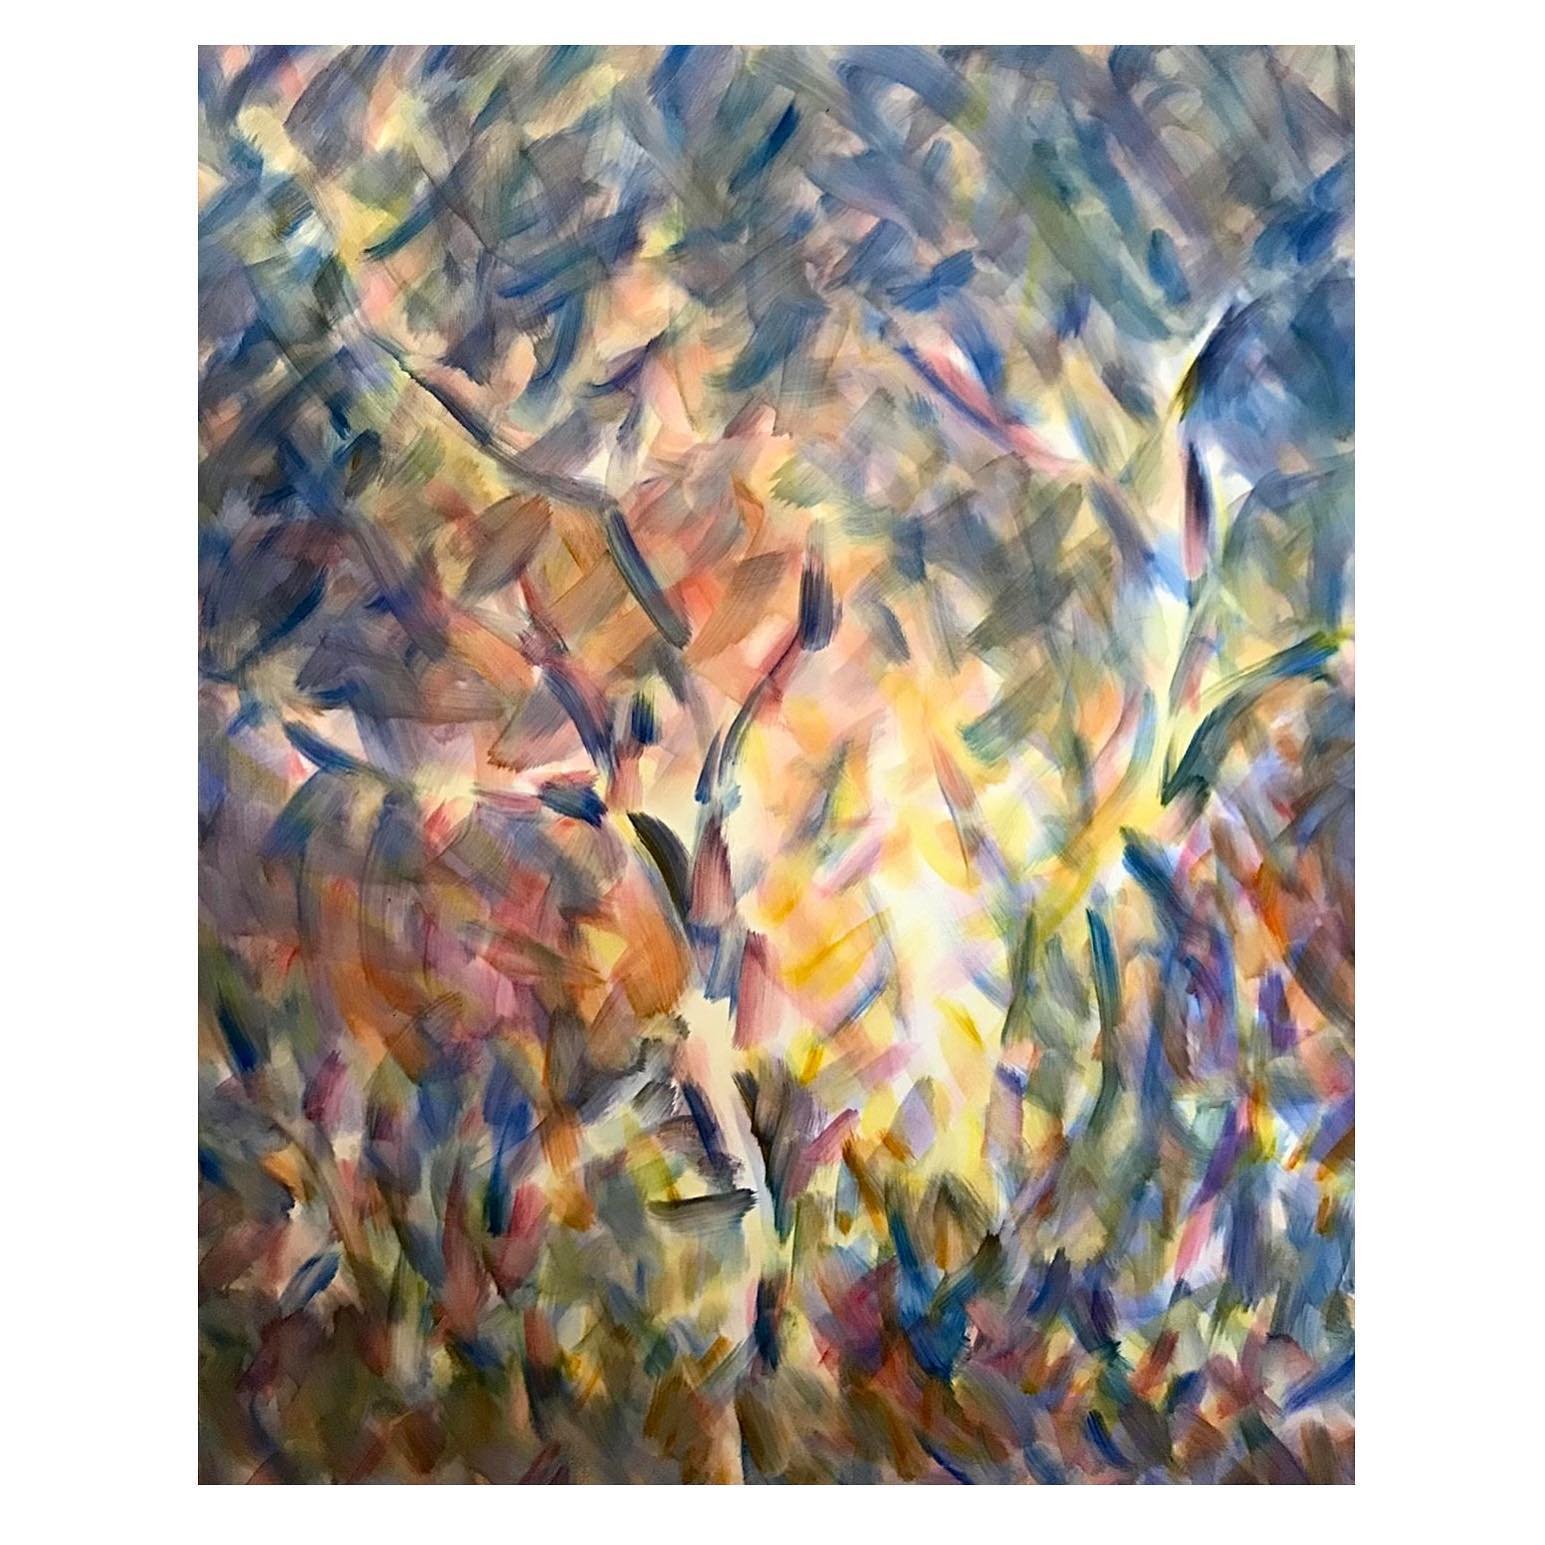 Last Light by @madeleine_love_studio is available on www.halfofvenus.com. 💌DM for feature.
-
-
-
-
-
-
-
-
-
-
-
-
-
-
-
-
-
-
-
-
#painters #paint #art #arts #paintings
#contemporaryart
#contemporarypainting #painting #abstraction #colours #colour 